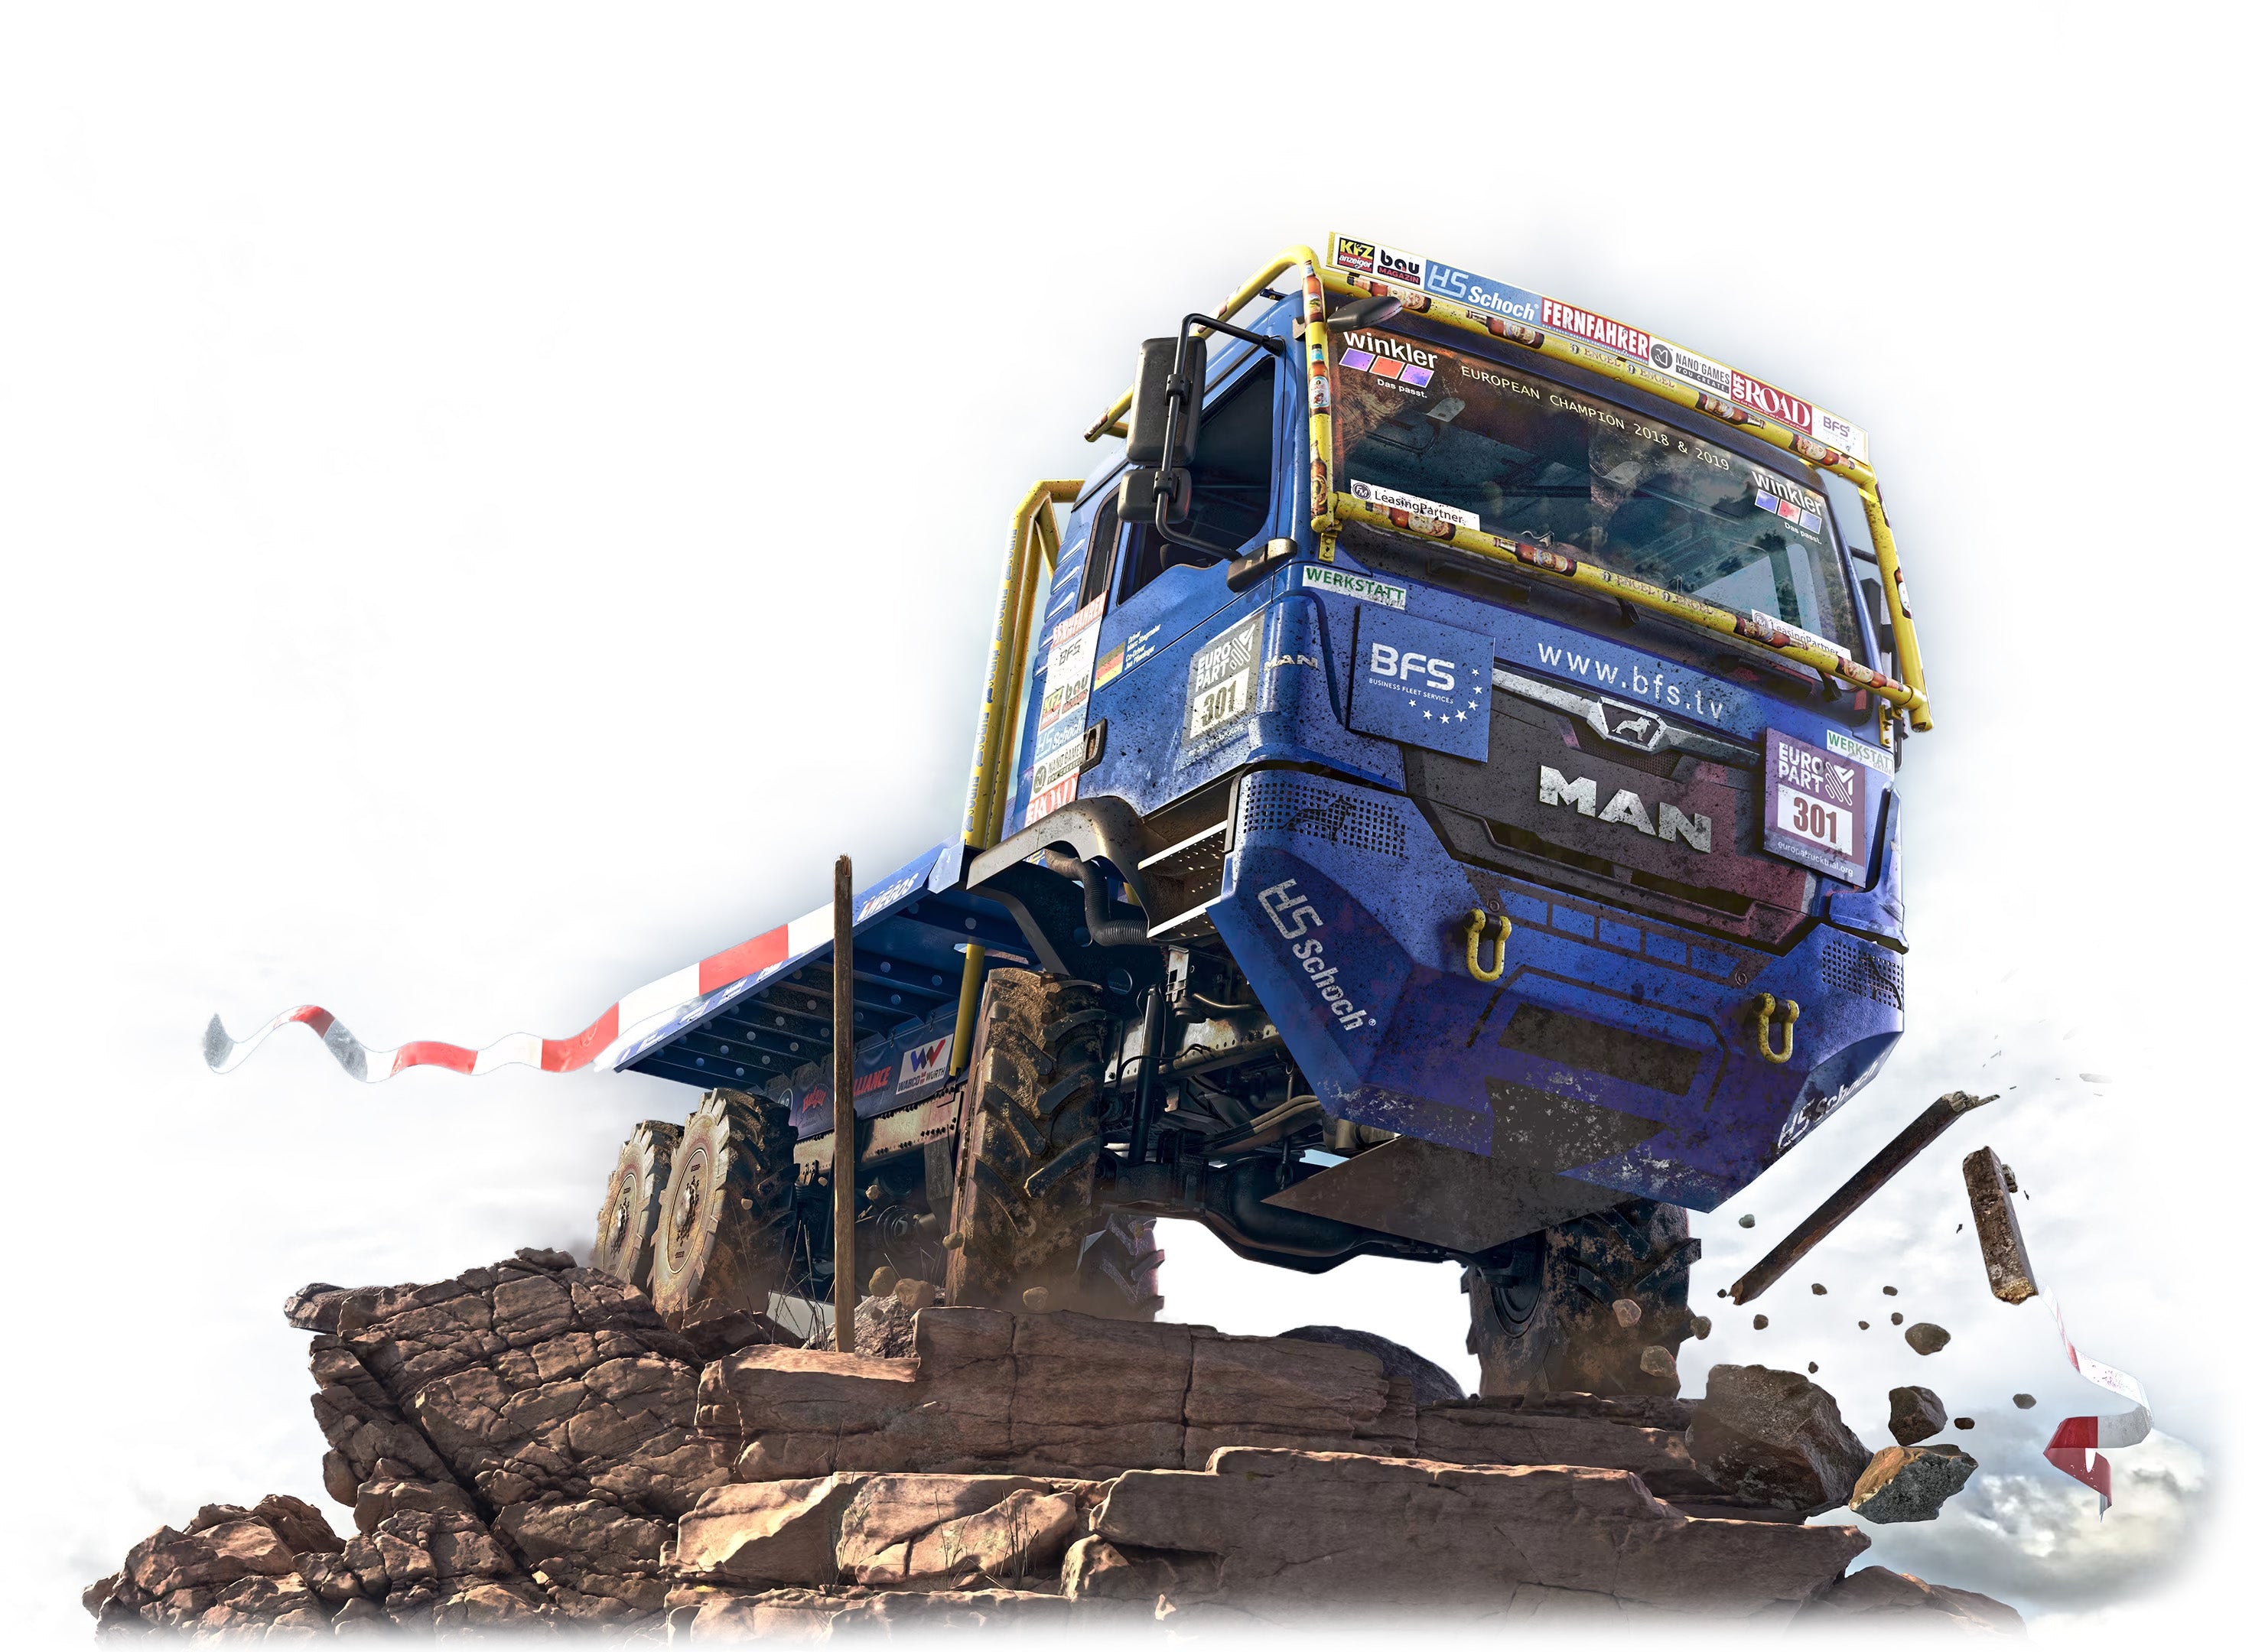 Heavy Duty Challenge: The Off-Road Truck Simulator